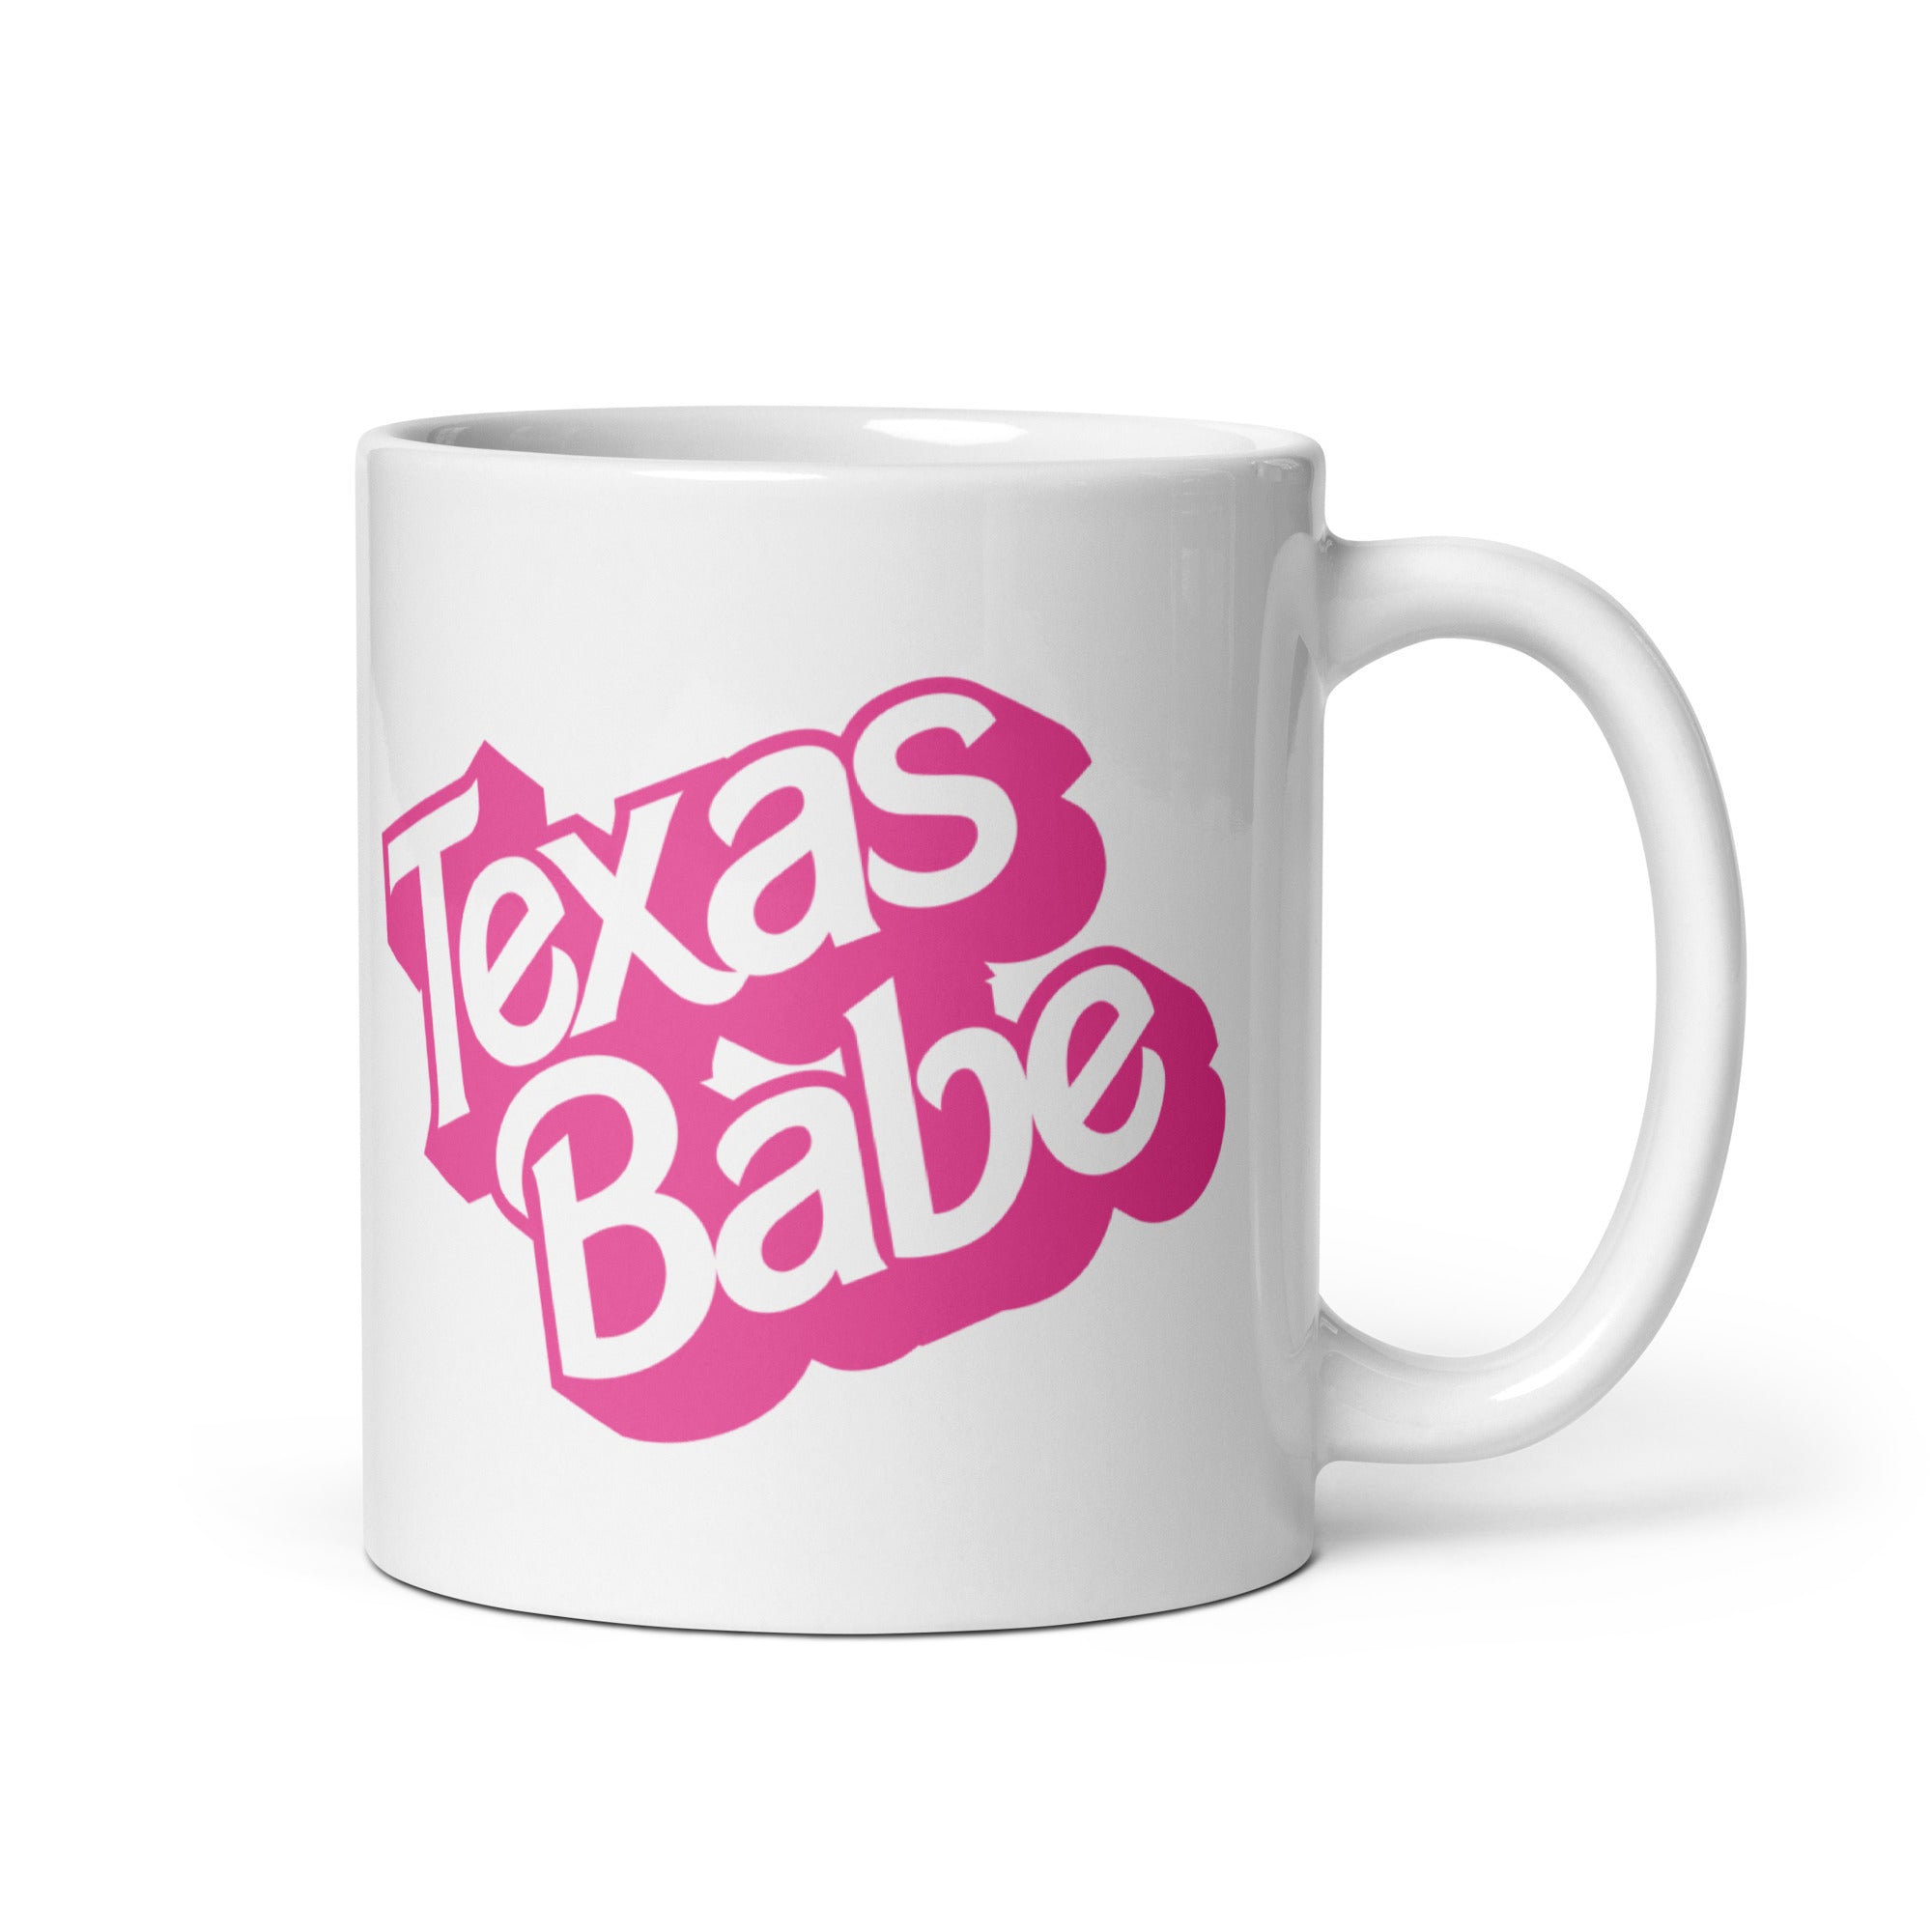 Texas Babe Mug